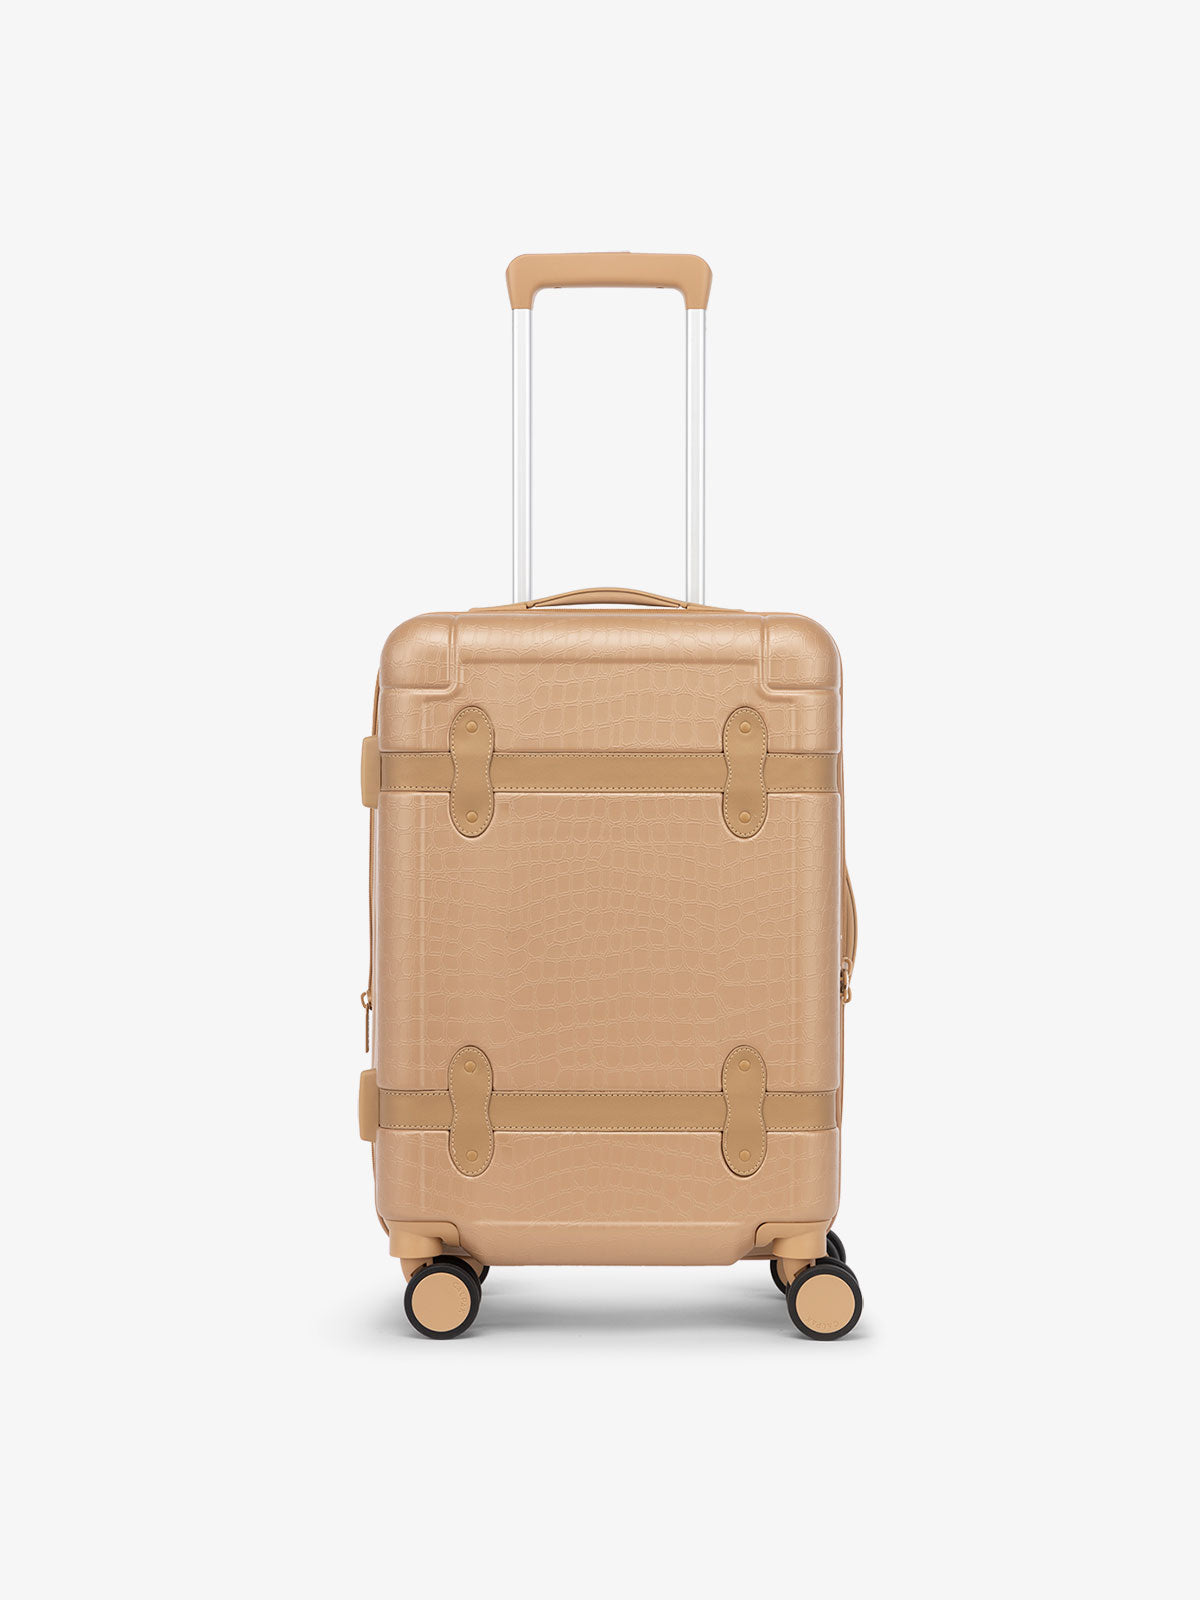 Trnk Carry On Luggage | CALPAK